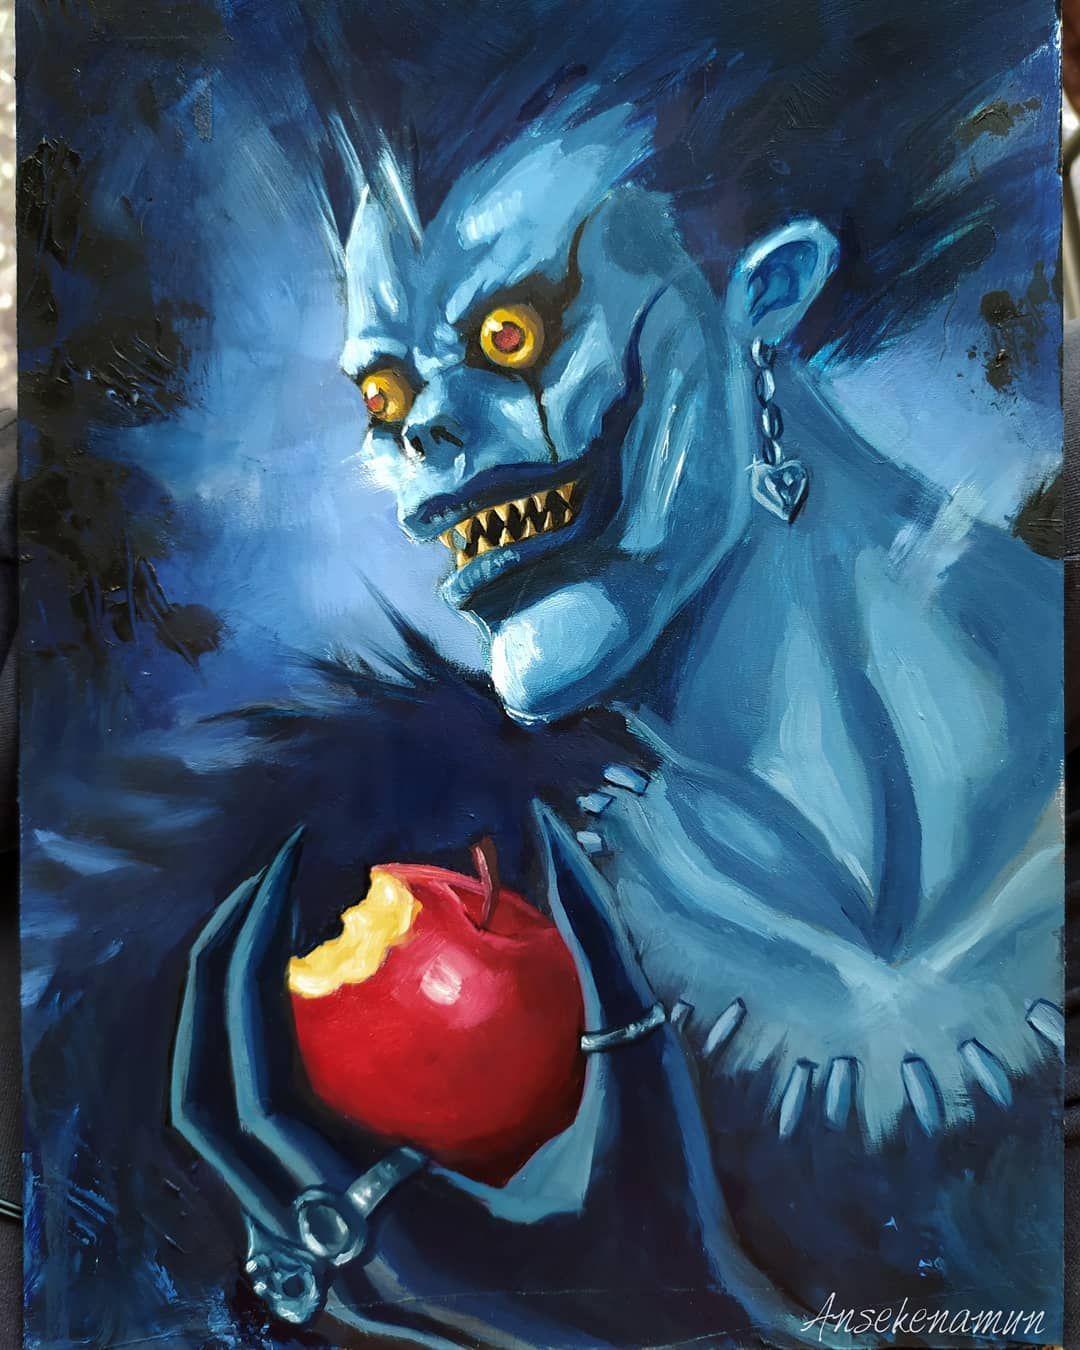 Ryuk of Death Note Ansekenamun Art oil painting in blue